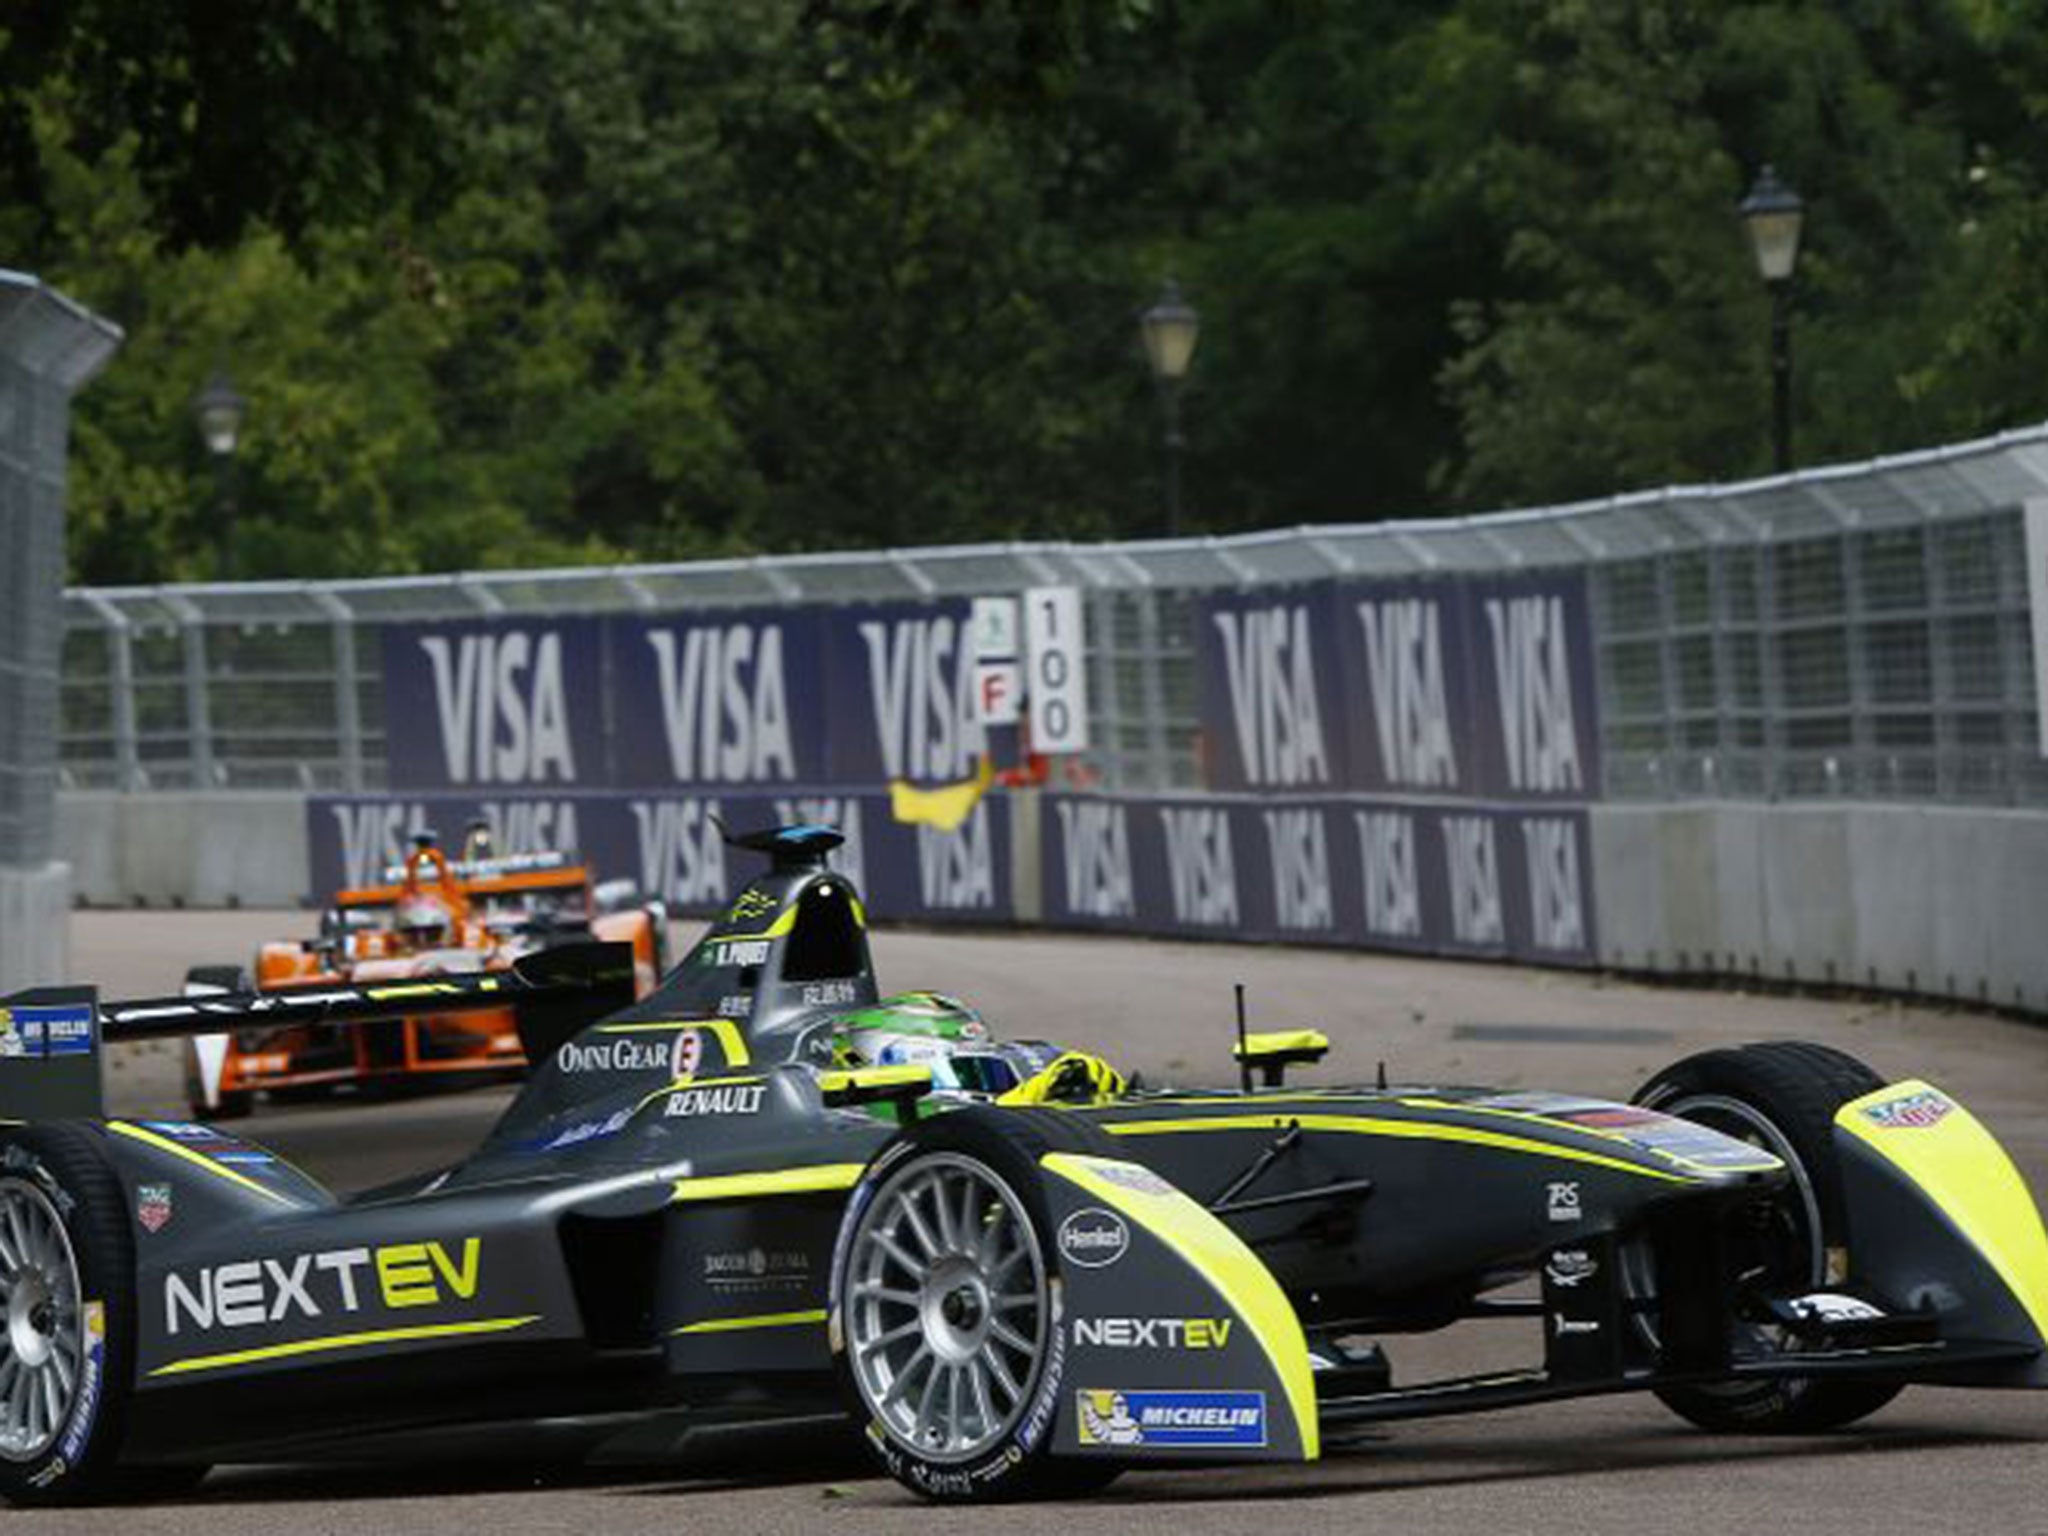 London Formula E ePrix, Battersea Park, London - 26 Jun 2015.